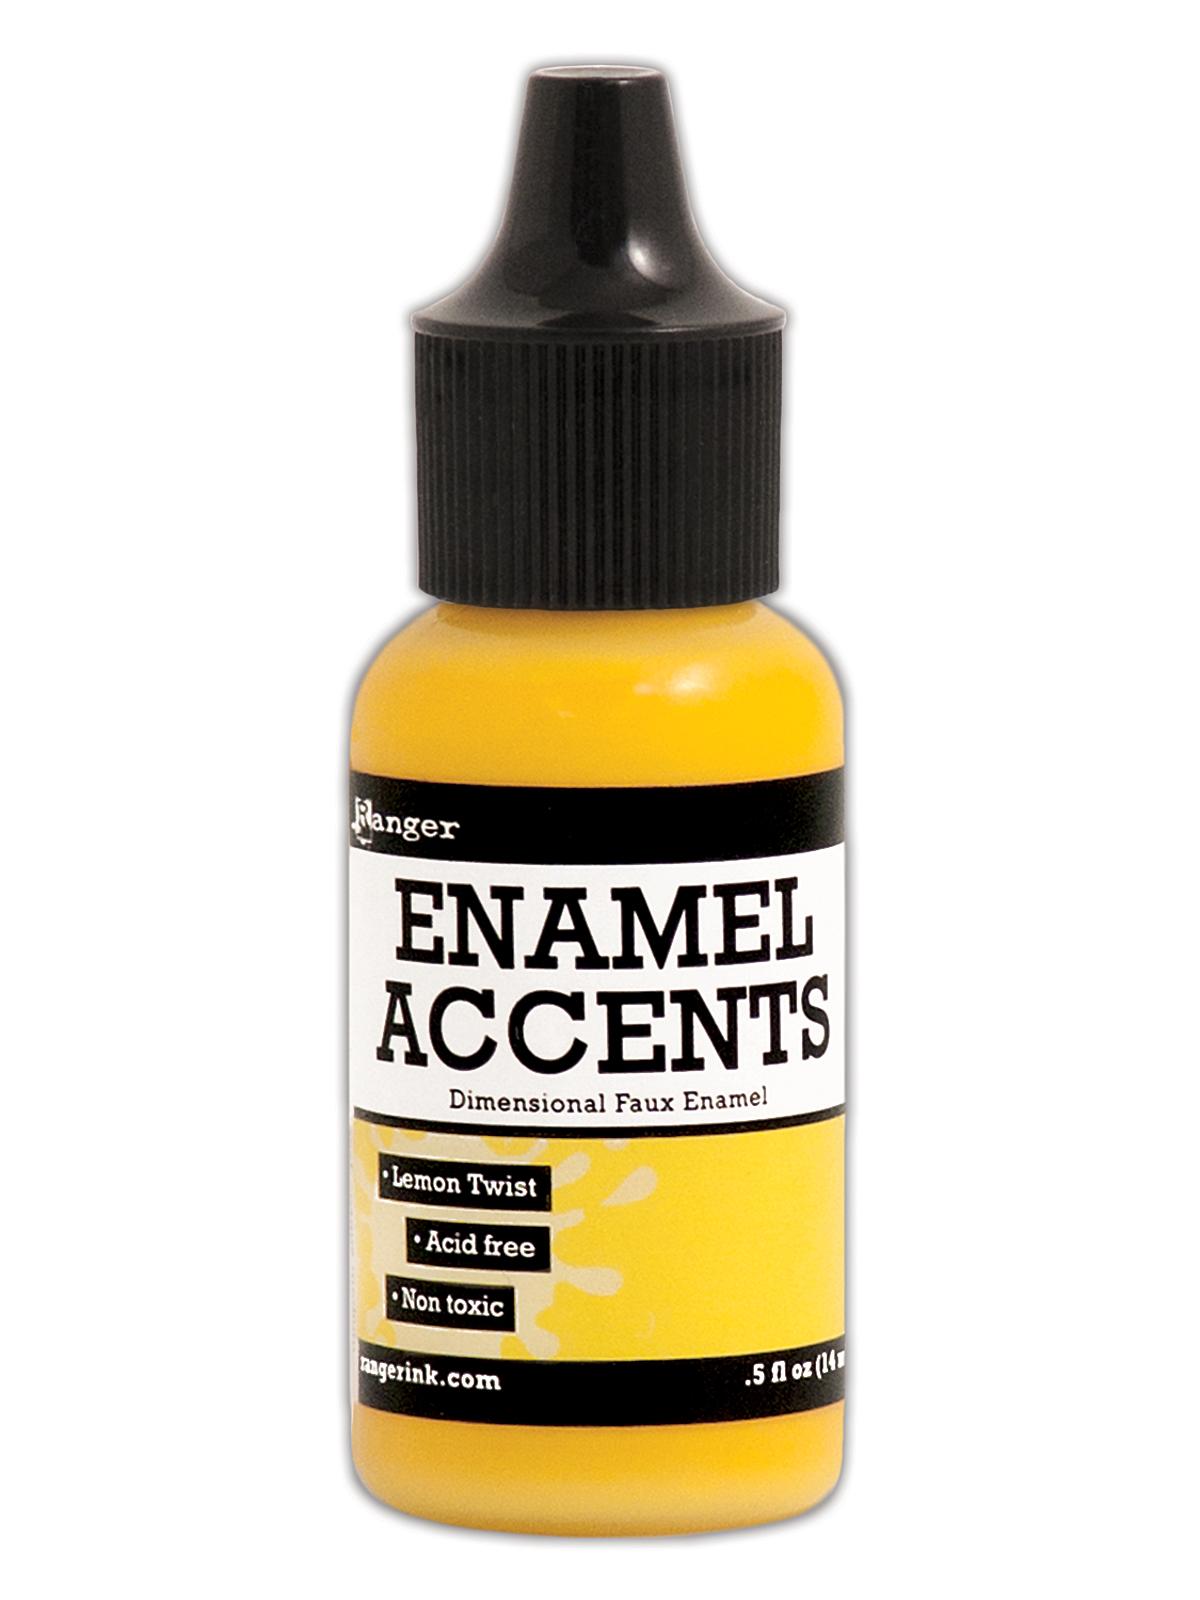 Enamel Accents Lemon Twist 1 2 Oz. Bottle